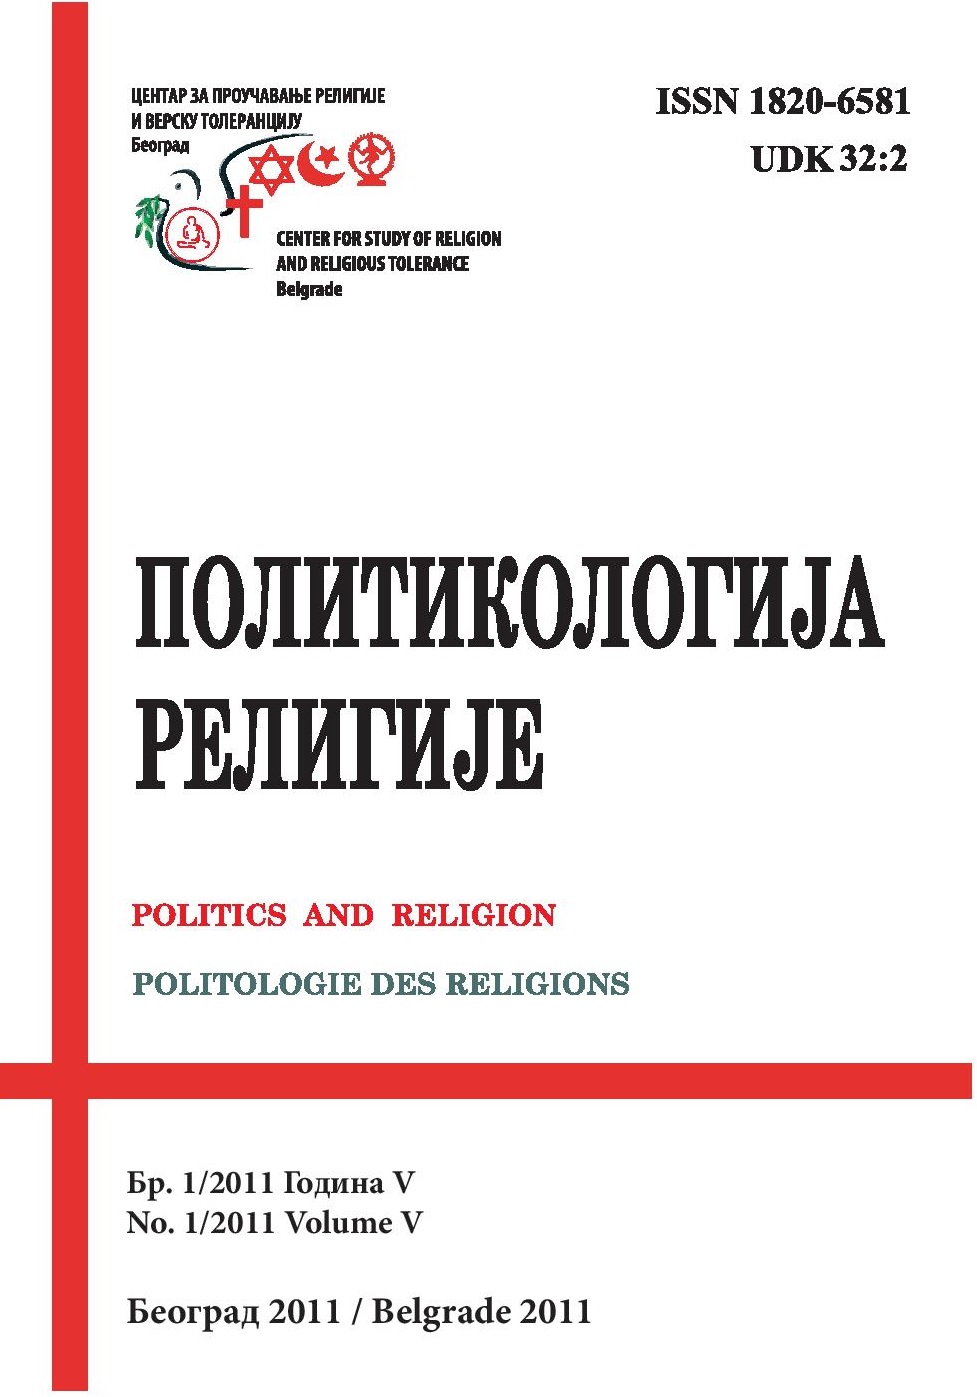 					View Vol. 5 No. 1 (2011): Politics and Religion Journal
				